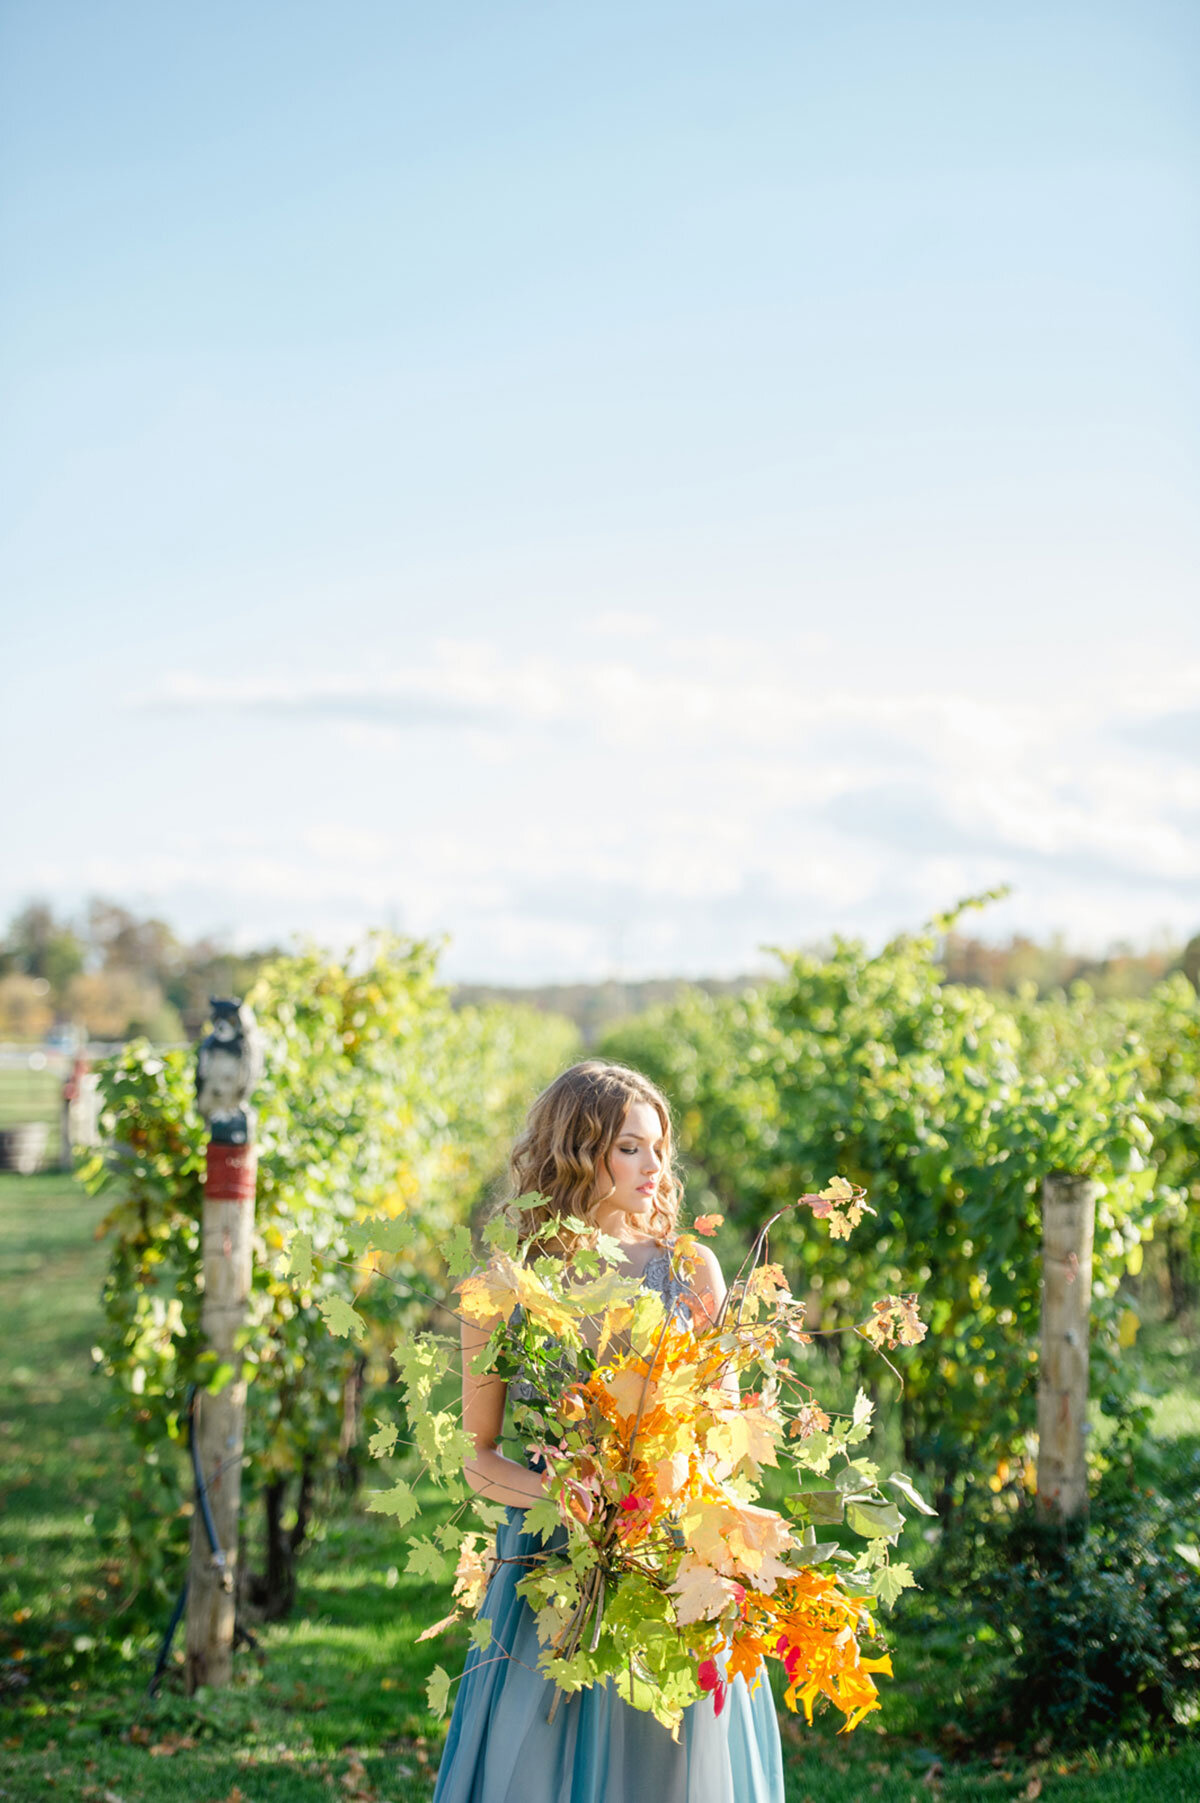 Honsberger-Estate-Winery-Fall-Editorialvineyard-Bride-photo-by-Krista-Fox-Photography-024.jpg